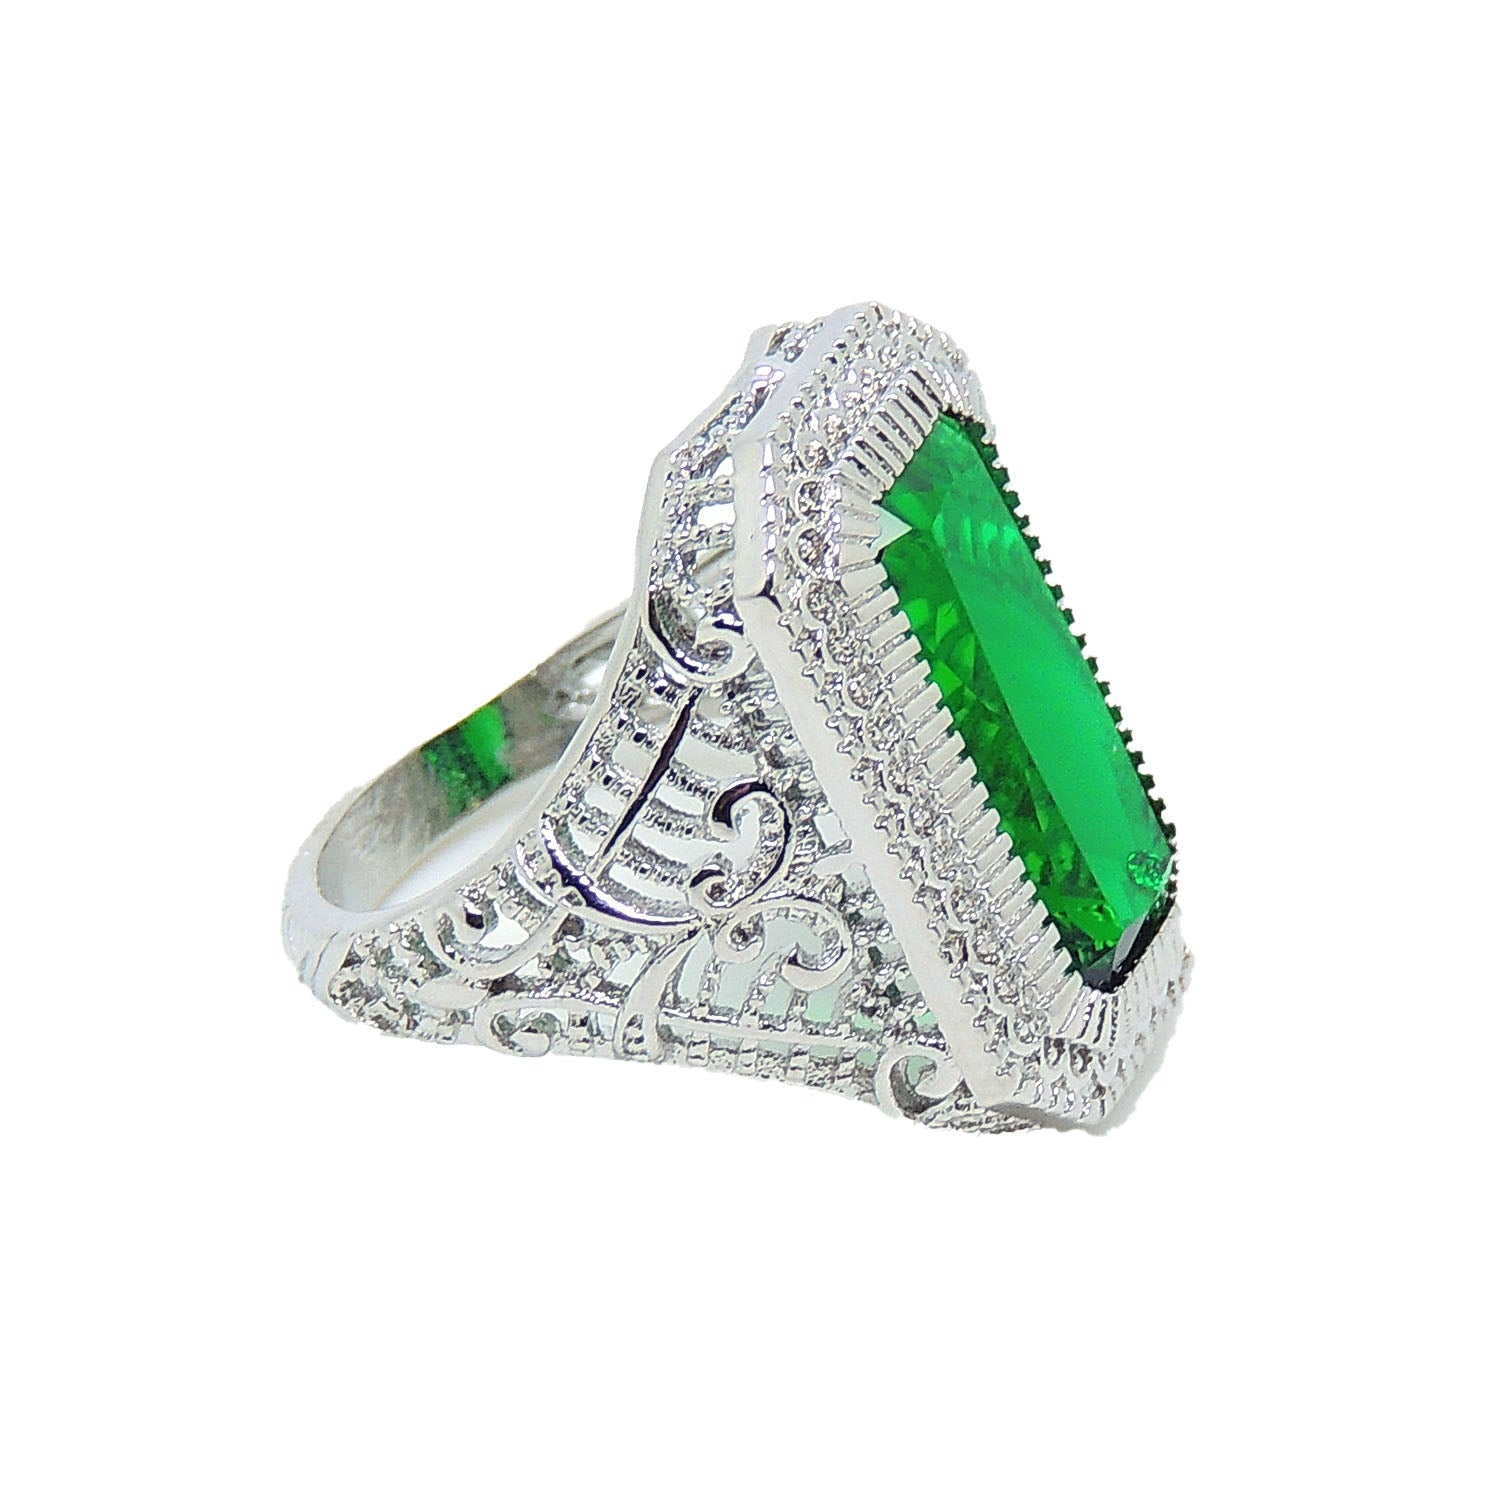 Dahlia Statement Ring Womens Green Emerald Cubic Zirconia Ginger Lyne - 10